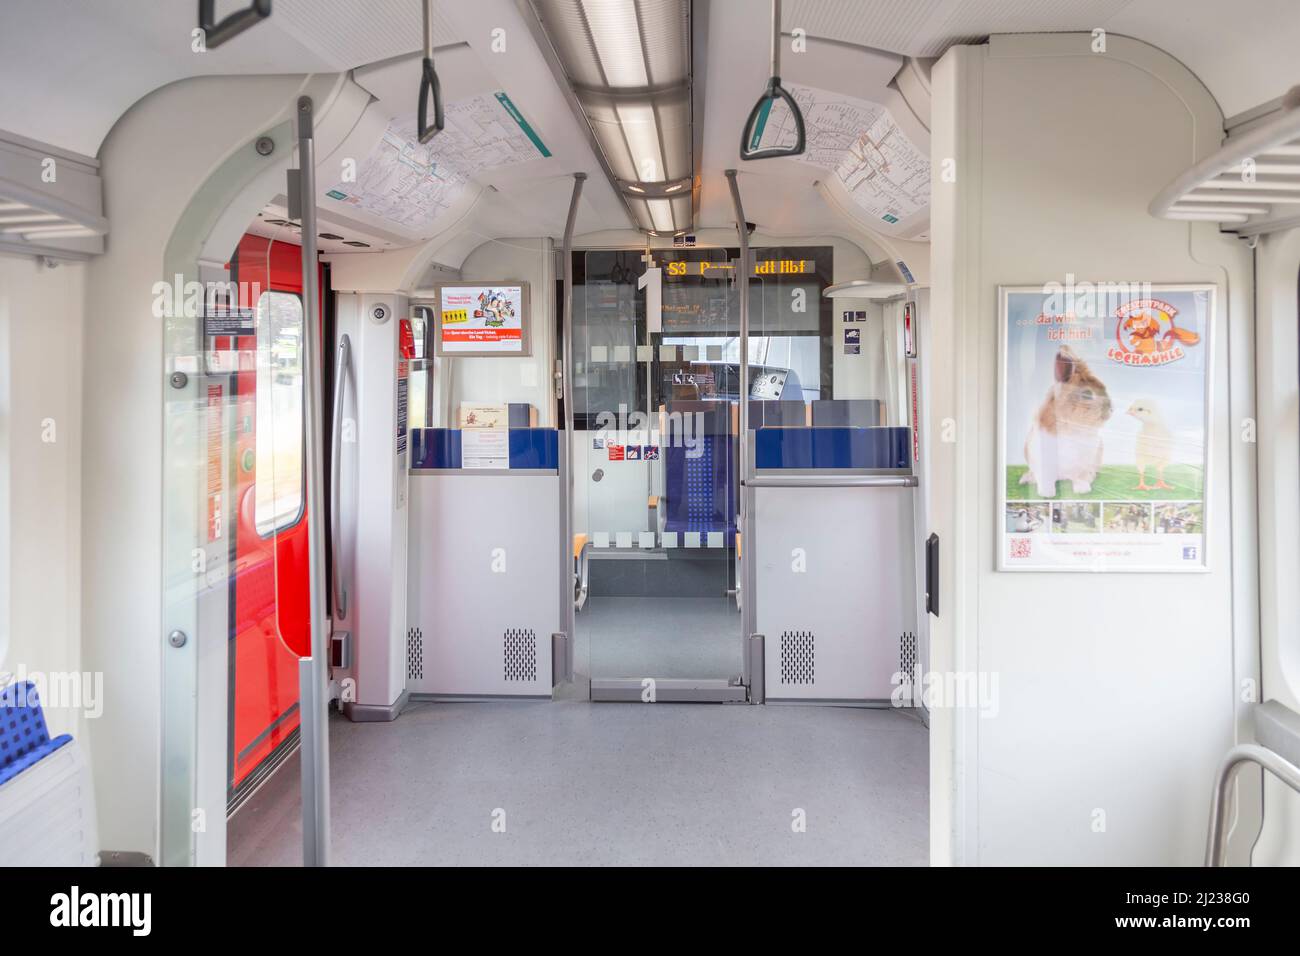 Frankfurt, Germany - June 15, 2015: inside the S-Bahn, the local public transportatio system in Frankfurt, Germany. Stock Photo